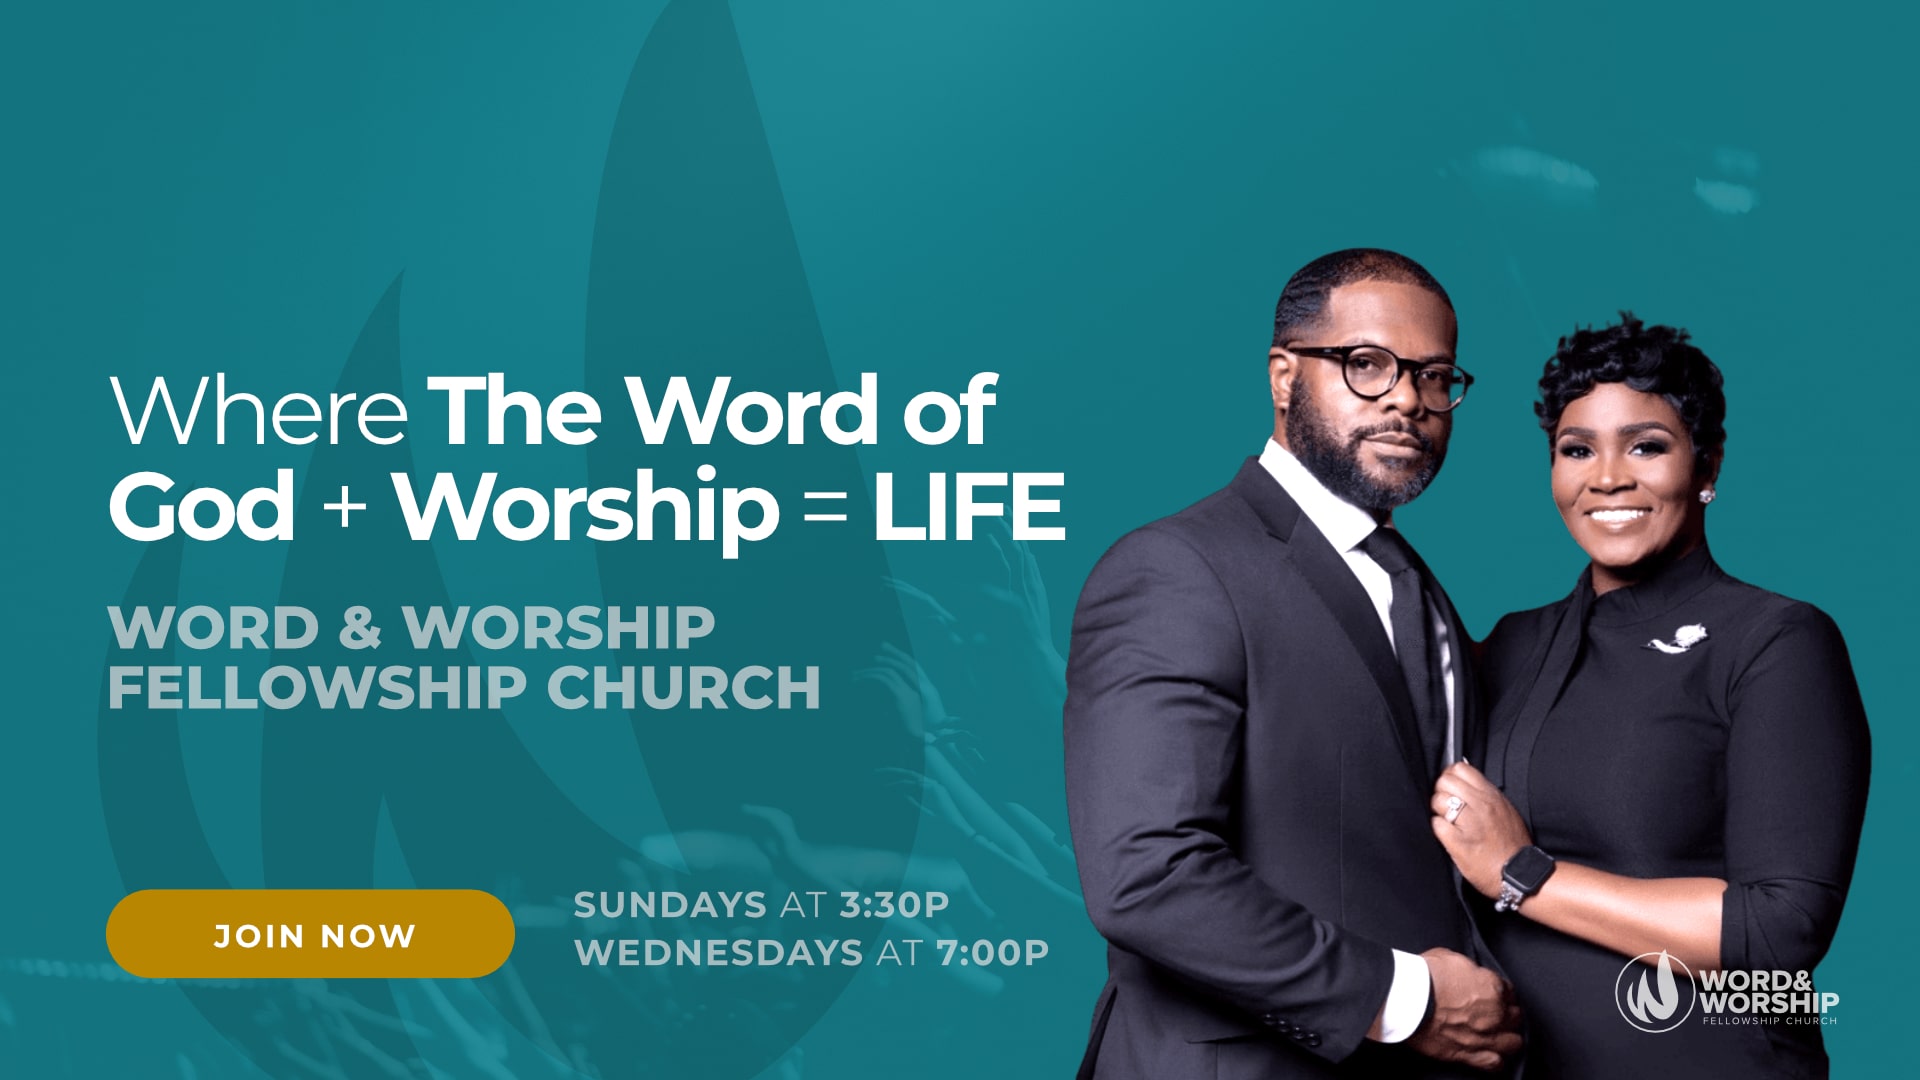 Word and Worship Fellowship Church